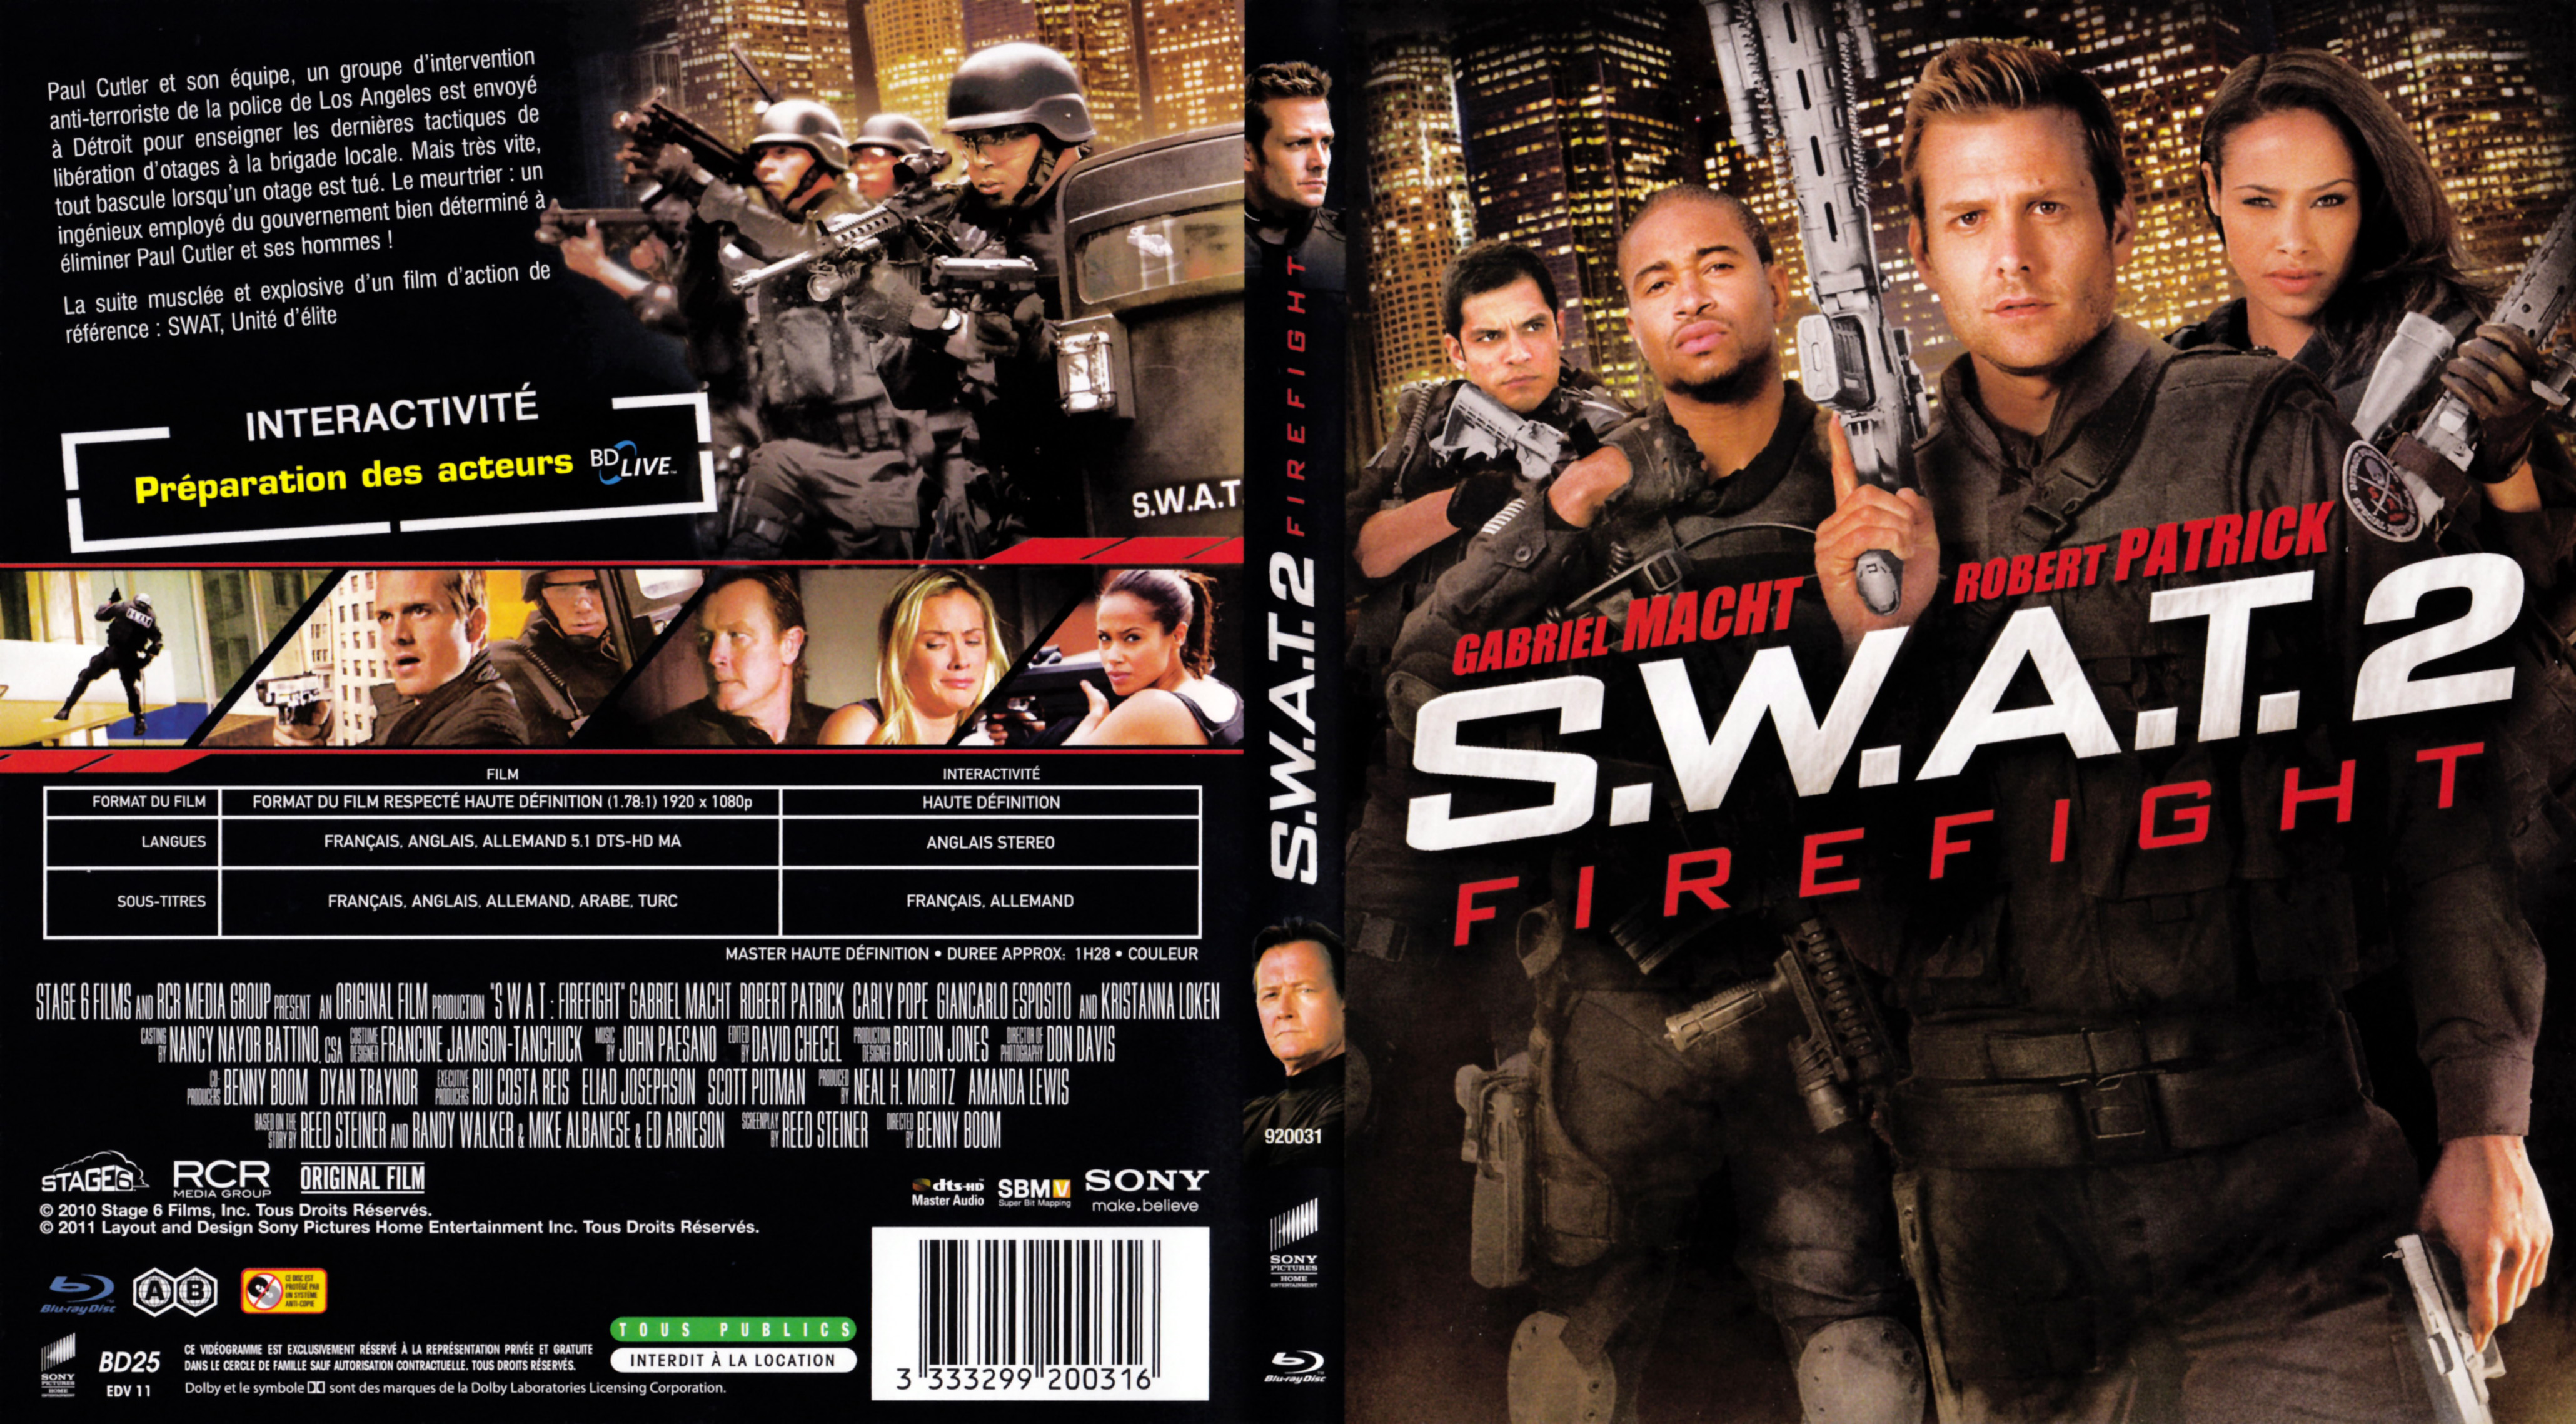 Jaquette DVD SWAT 2 firefight (BLU-RAY)